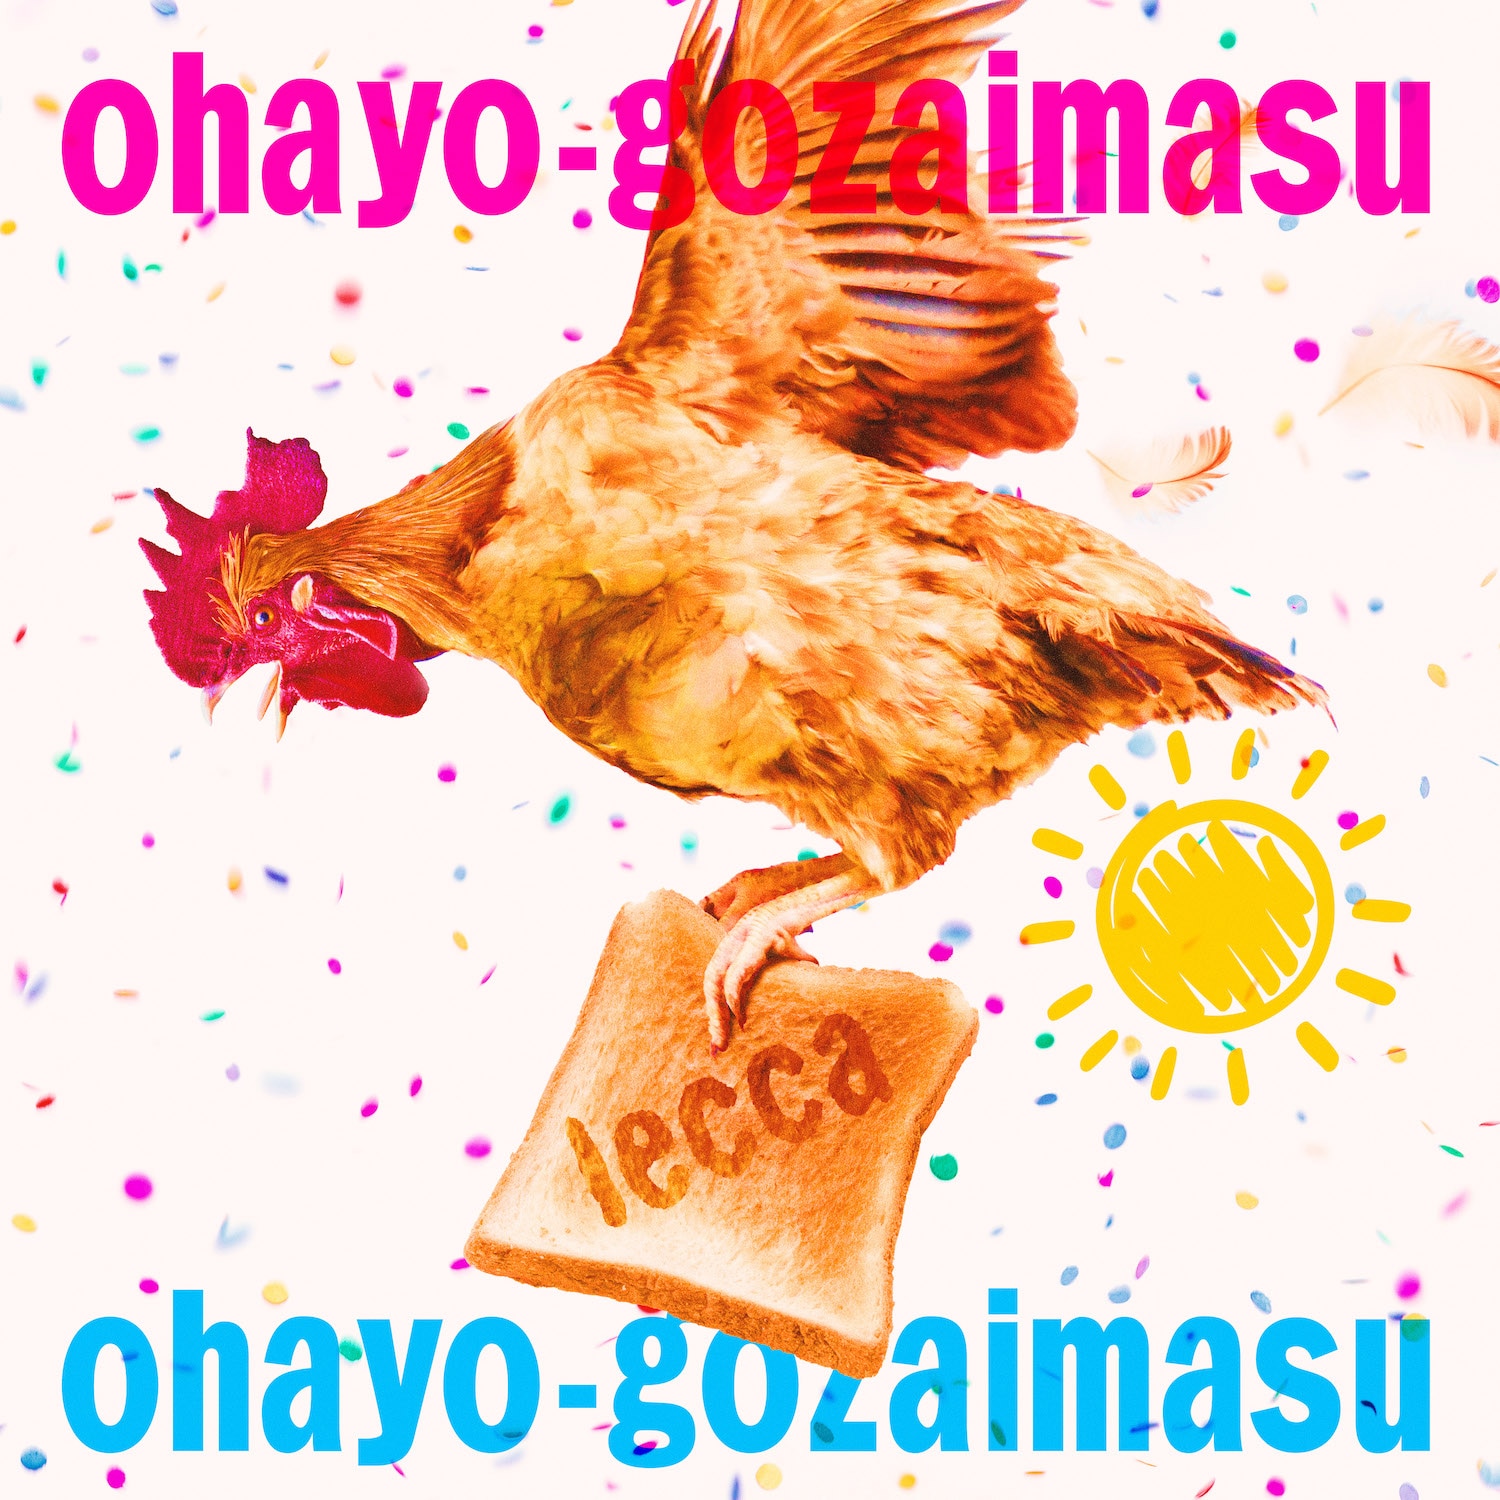 「ohayo-gozaimasu」のダンス動画をInstagram・TikTokで募集する【lecca「ohayo-gozaimasu」Instagram・TikTokダンスコンテスト】開催決定！優秀賞は2024年leccaライブへの出演権！